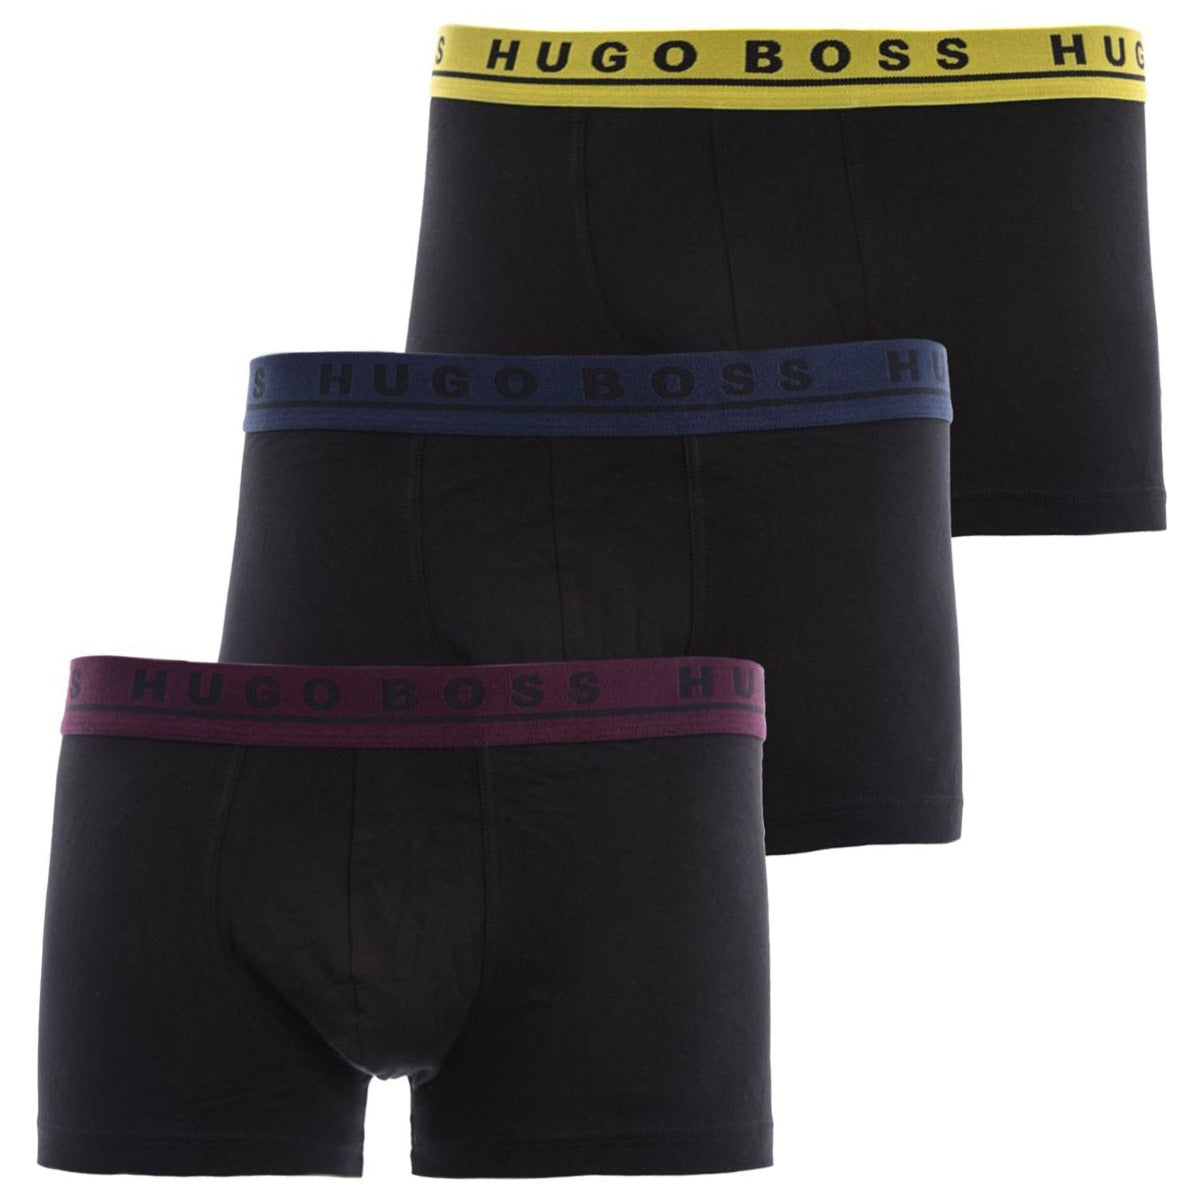 BOSS Trunk 3 Pack Underwear in Navy, Burgundy & Yellow